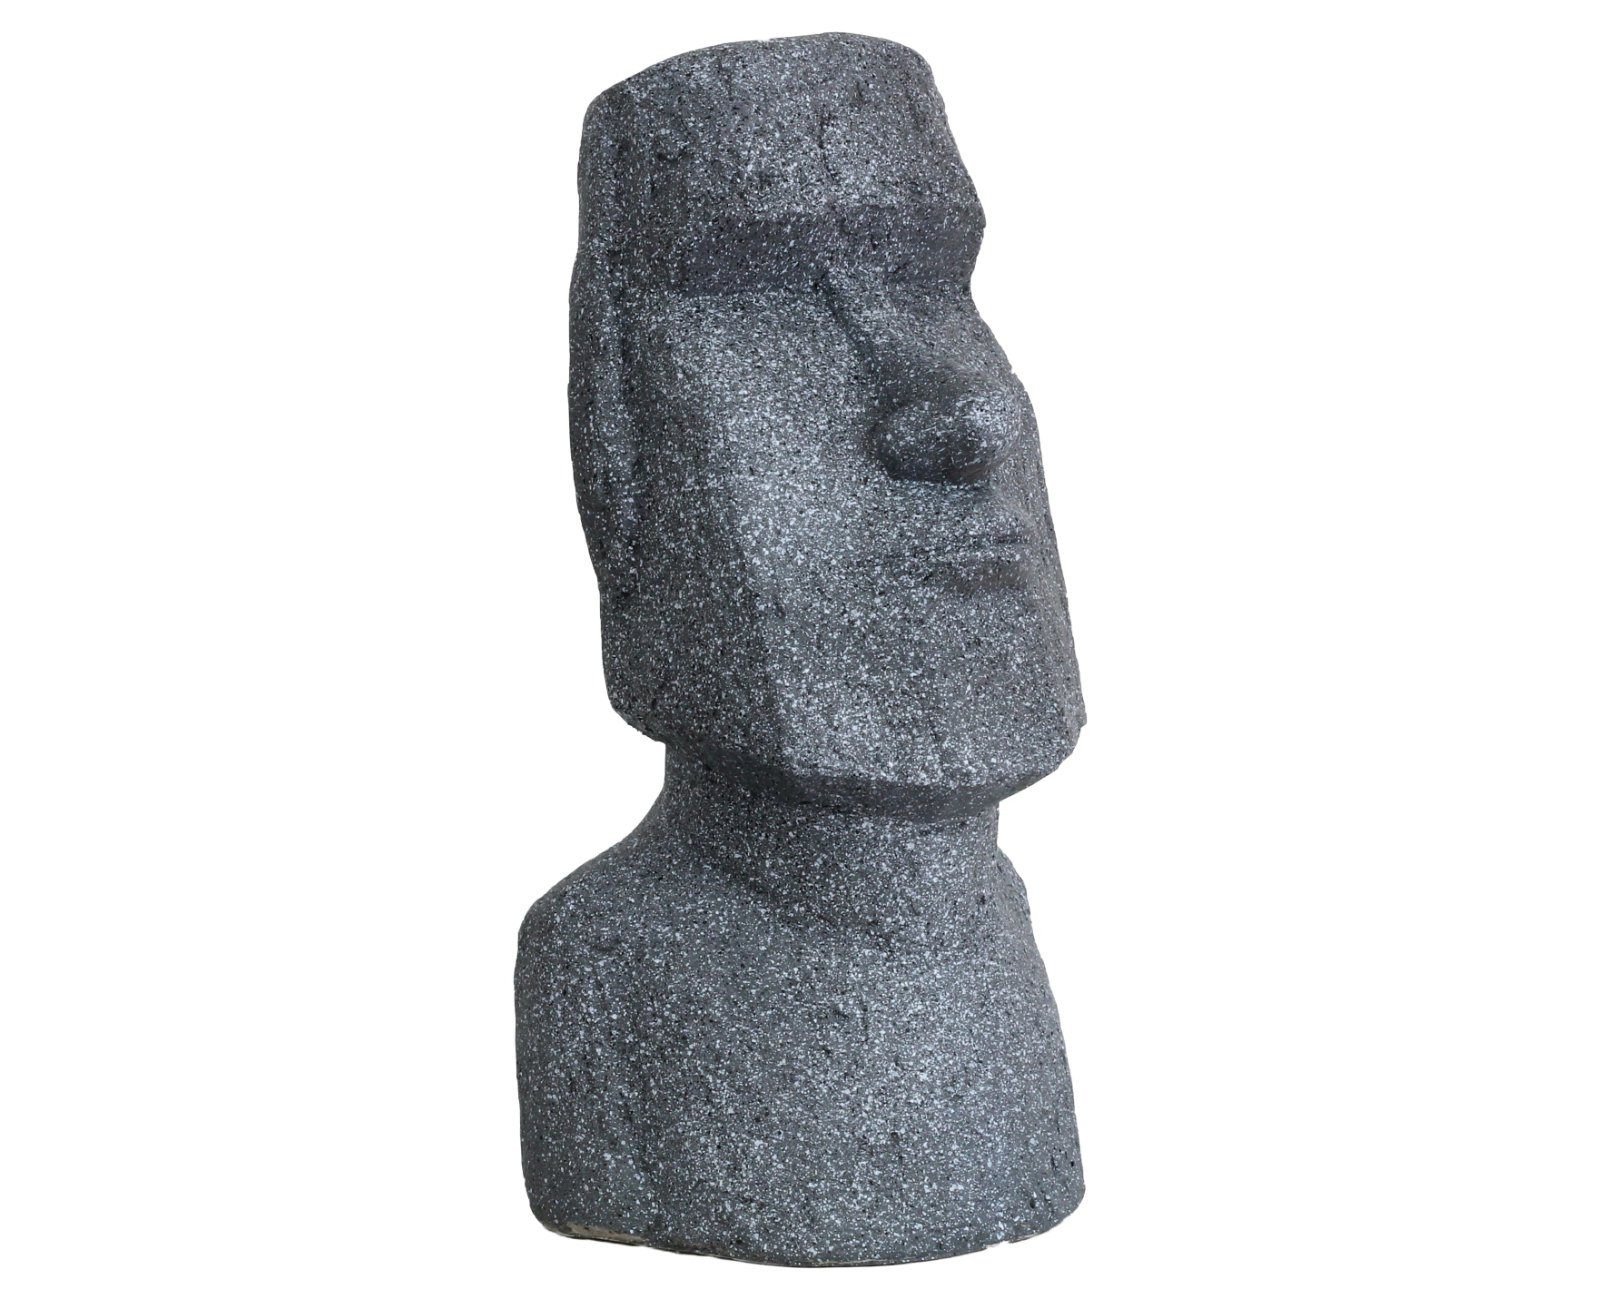 HAGO Buddhafigur Moai Kopf Skulptur Figur Gartenfigur Büste Osterinsel Statue Deko